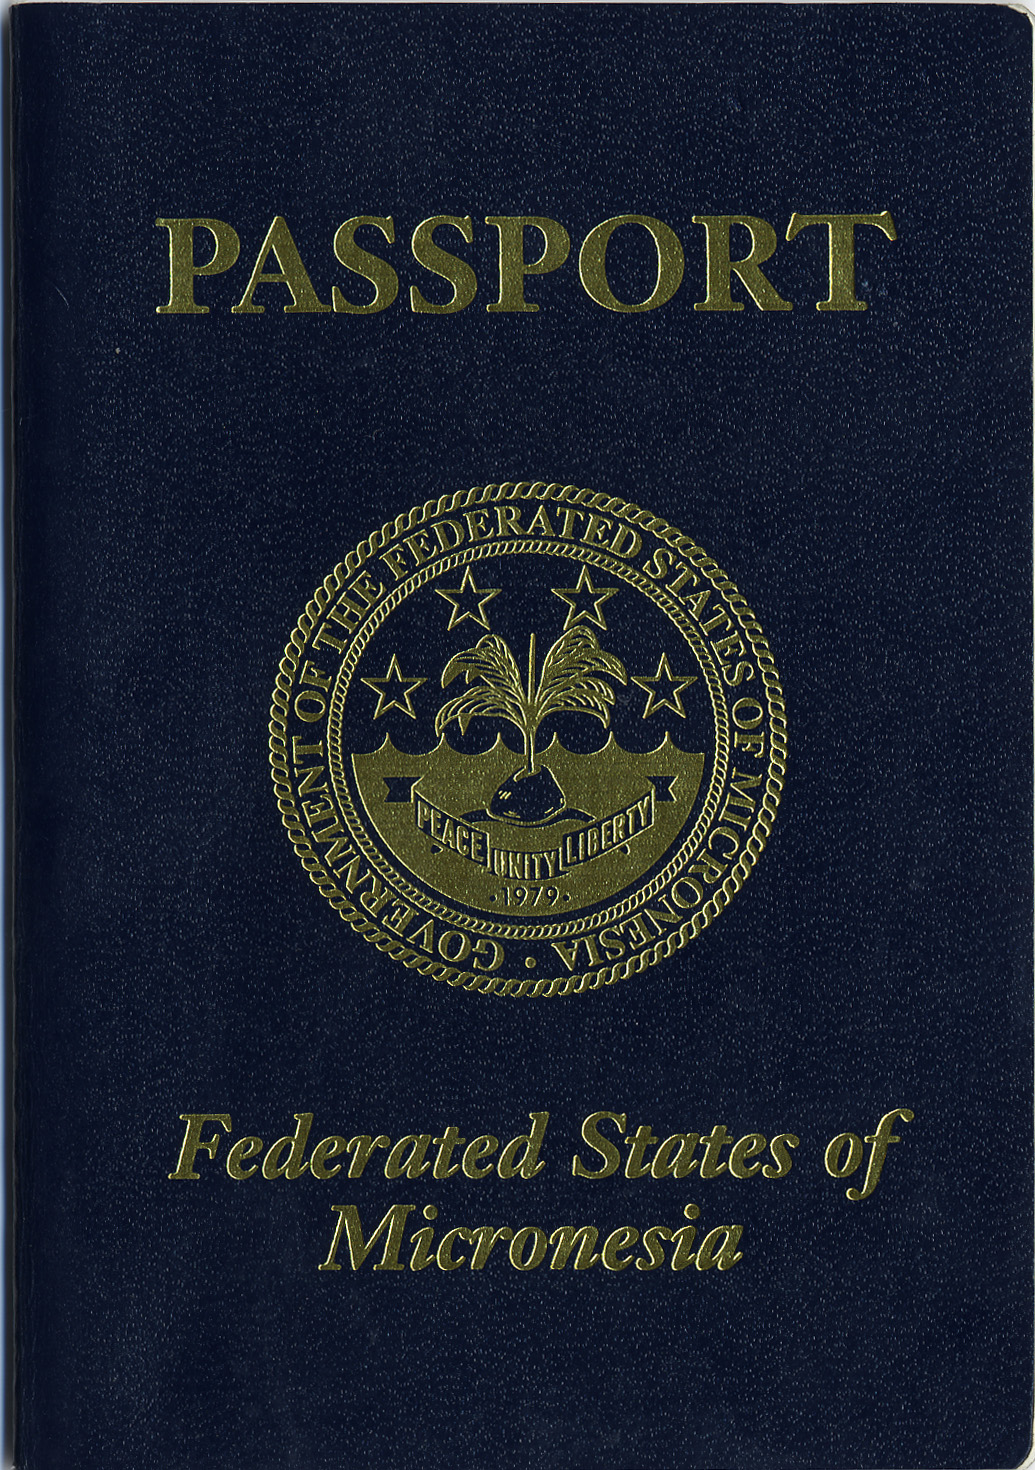 Image of the Micronesia Passport Cover